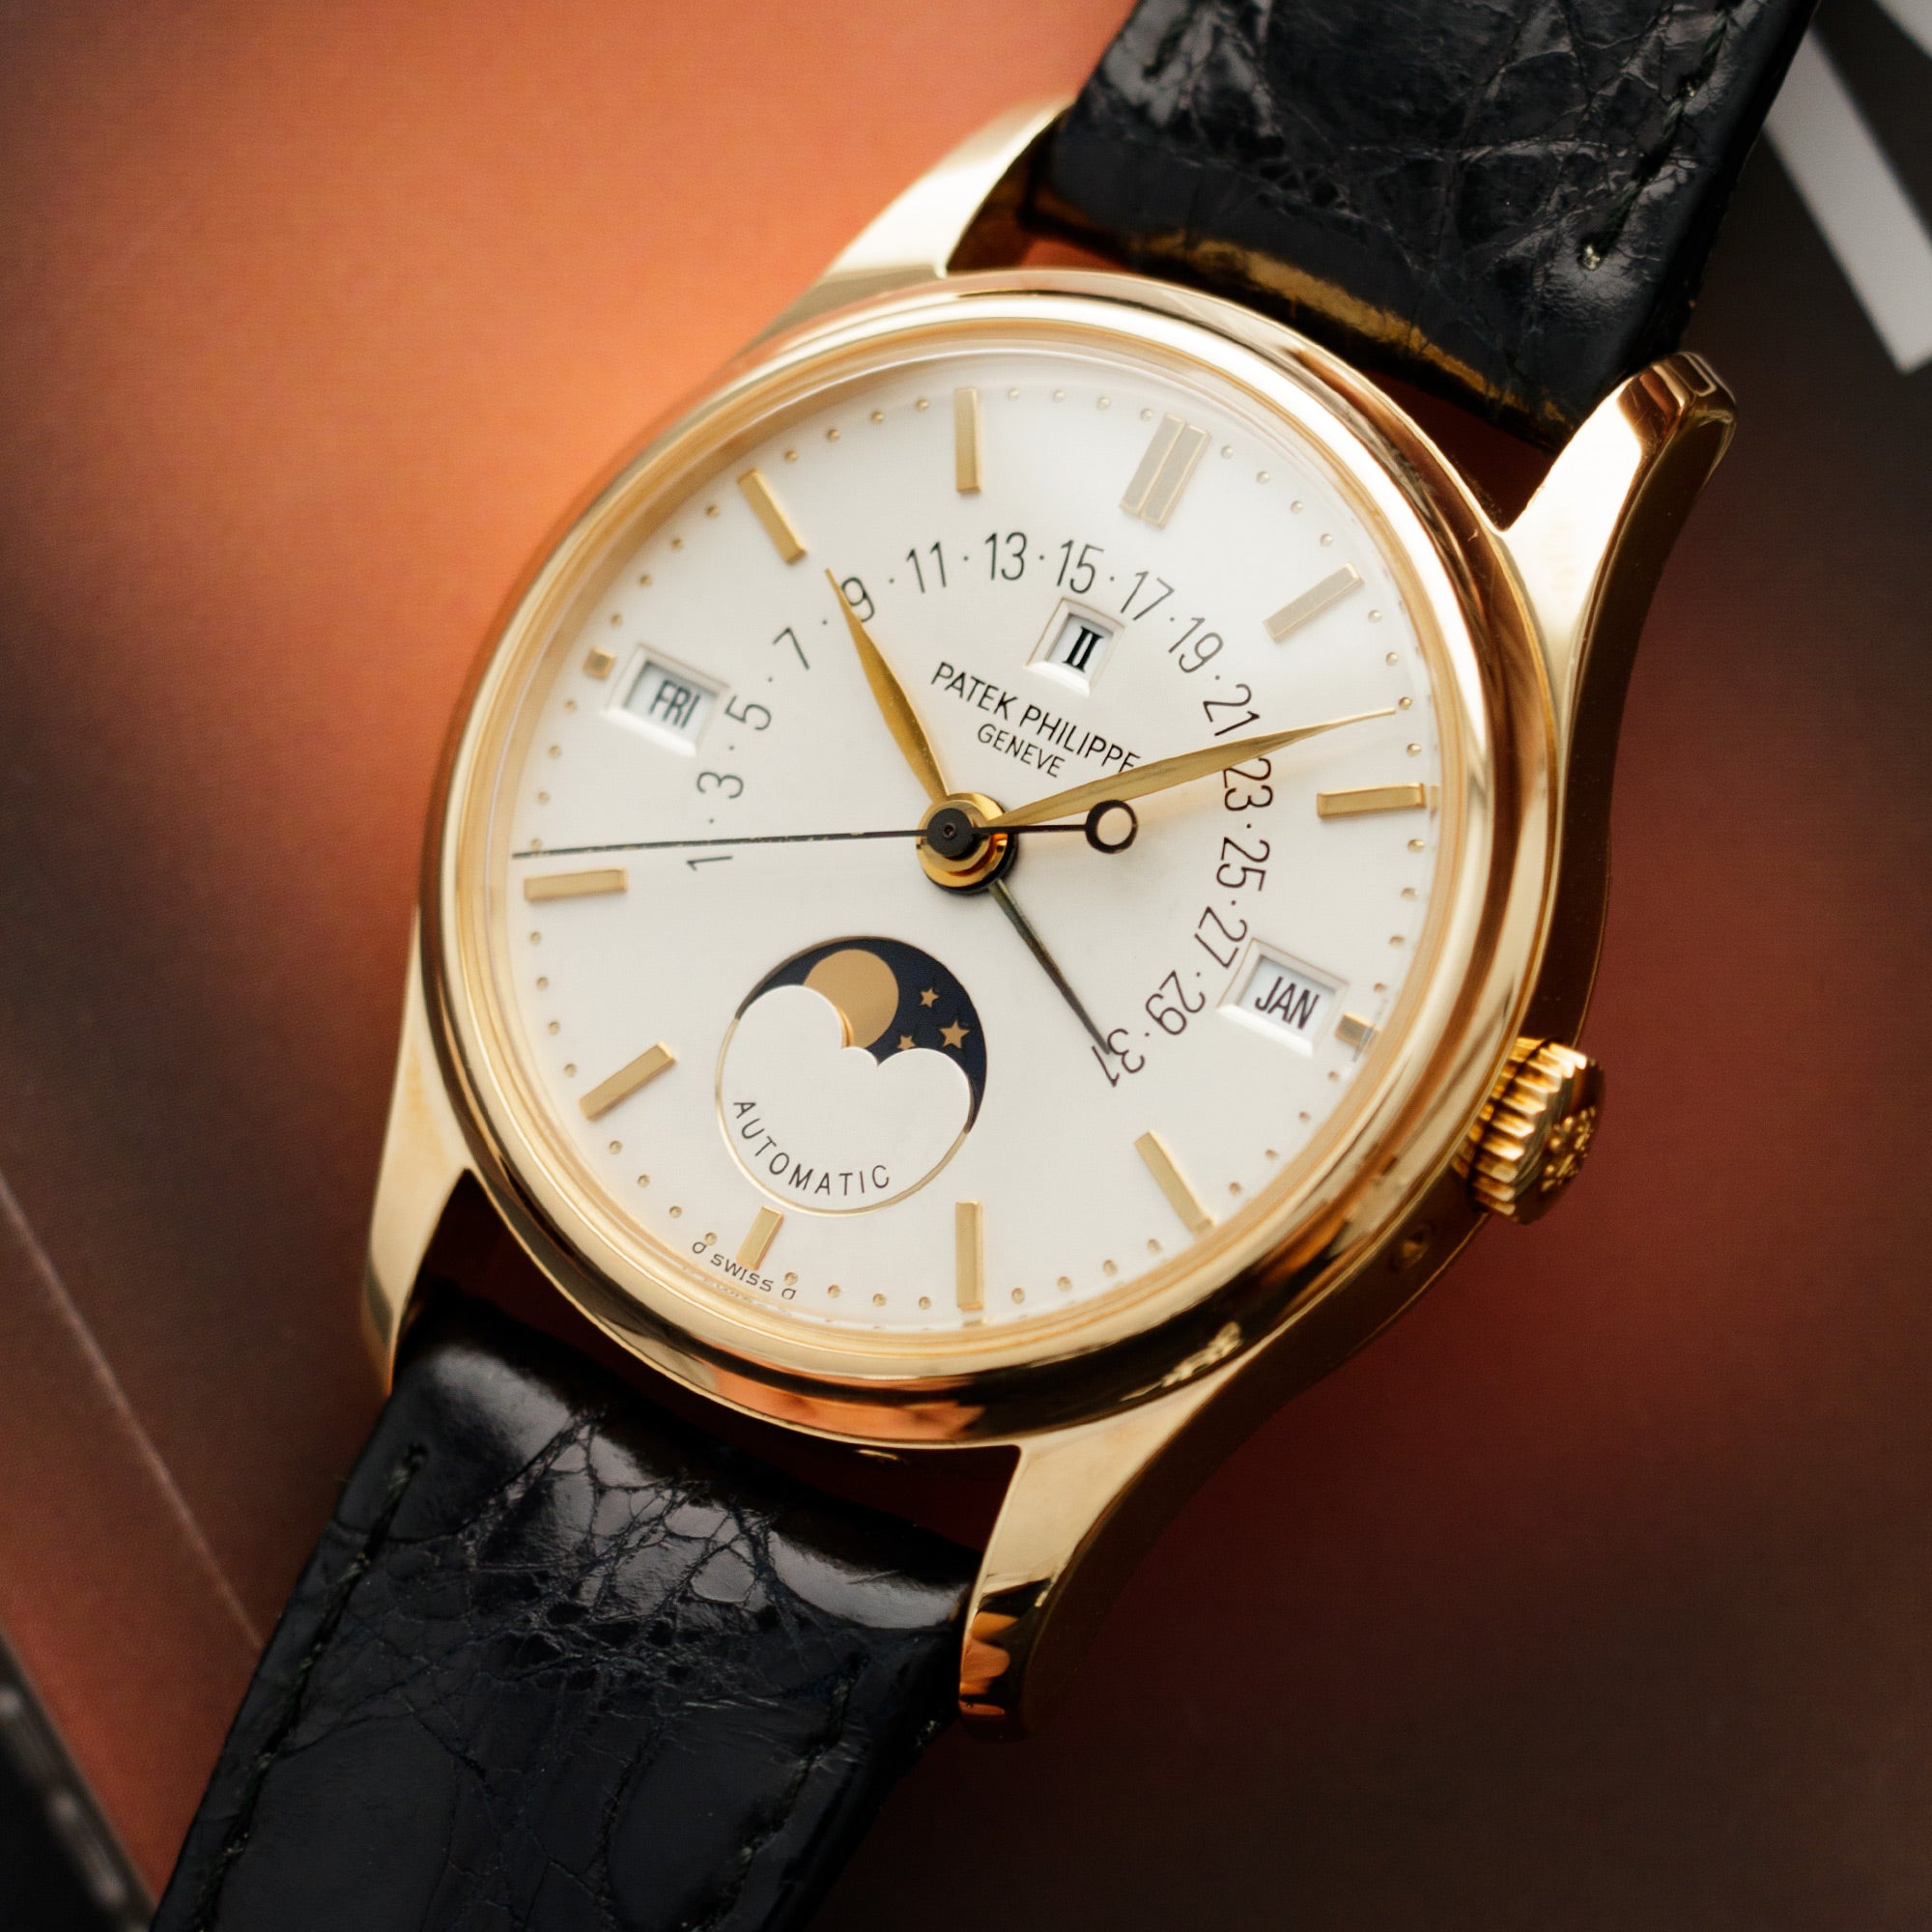 Patek Philippe - Patek Philippe Yellow Gold Perpetual Calendar Retrograde Watch Ref. 5050 - The Keystone Watches